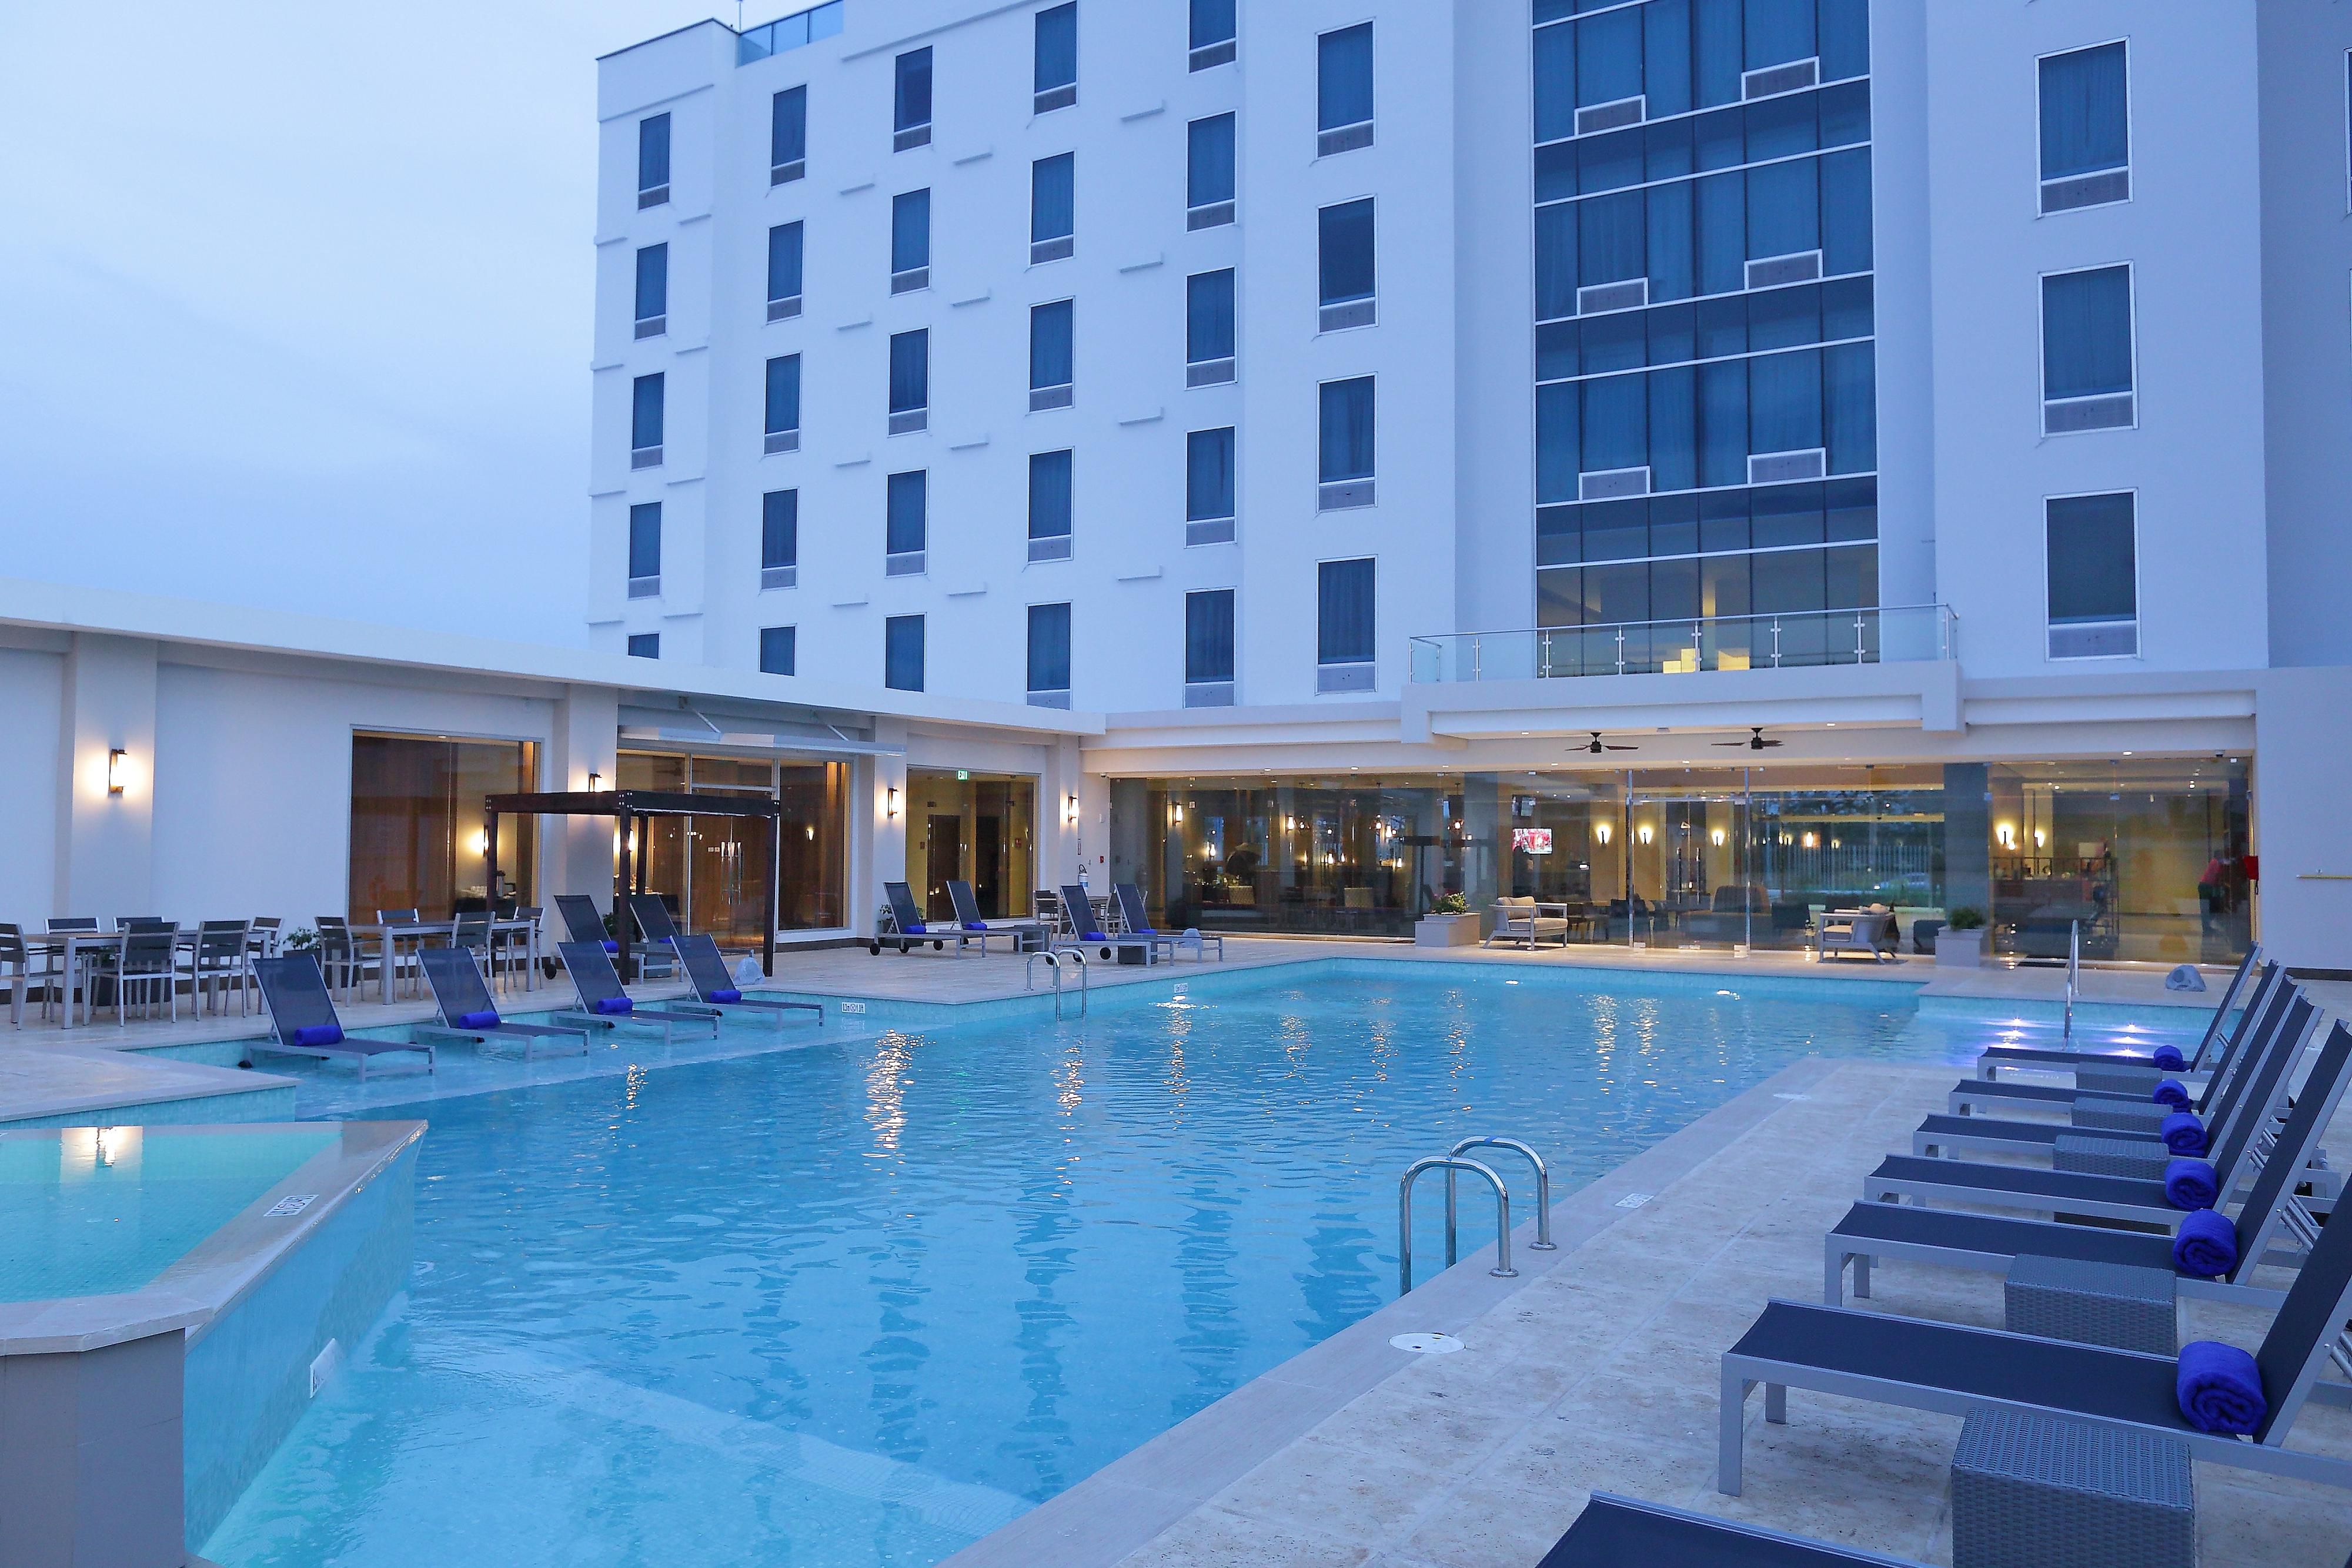 Hotelansicht Schwimbad, Hotel Crowne Plaza Panama Flughafen